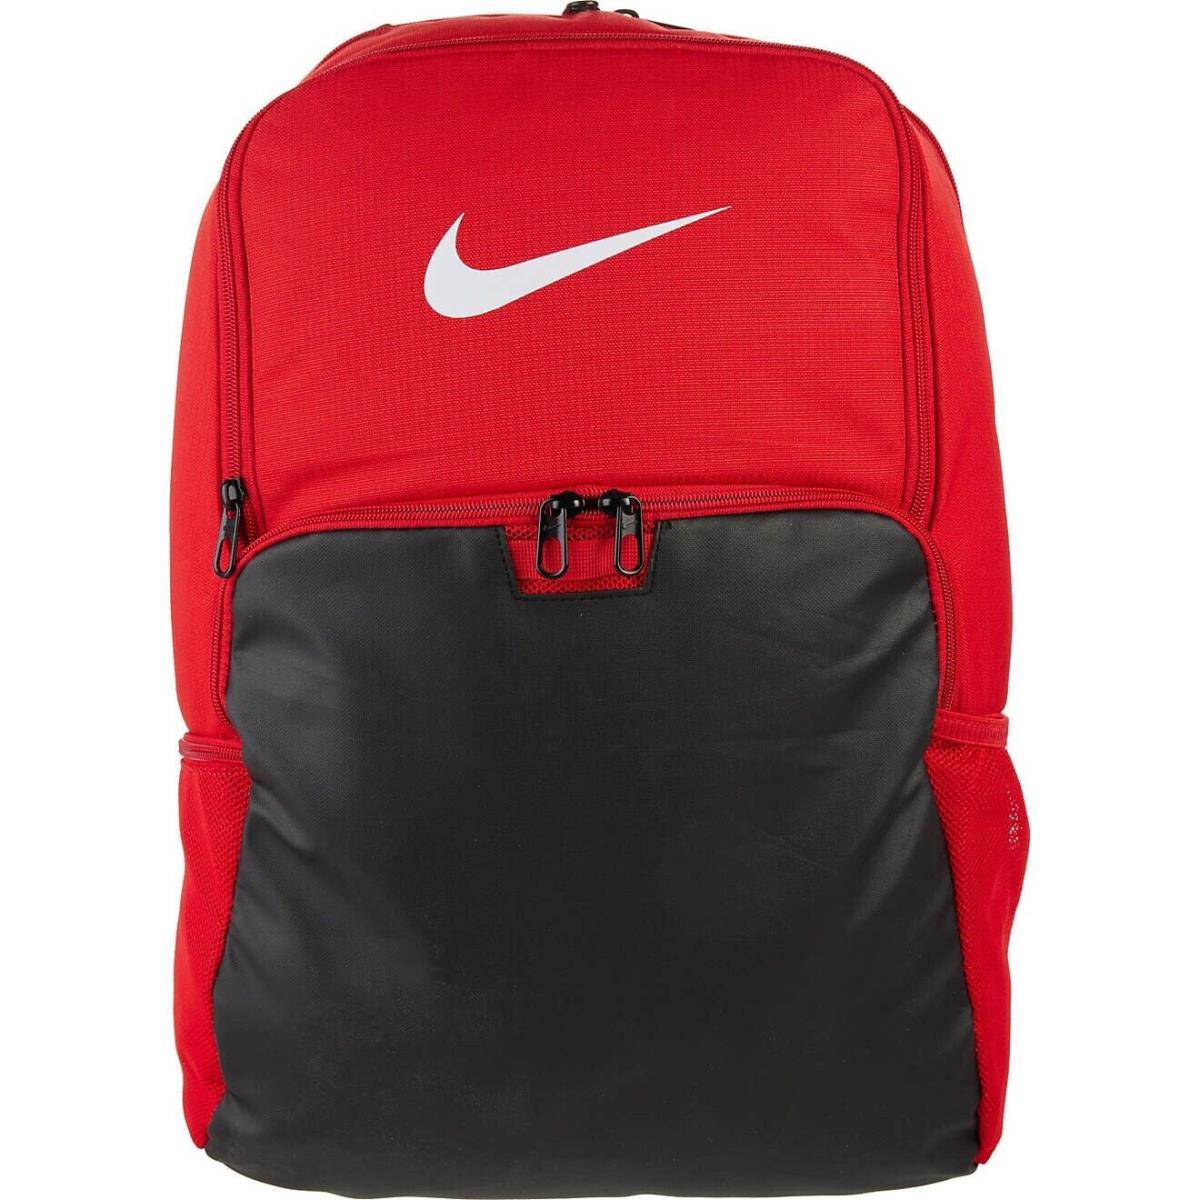 Nike Brasilia 9.0 Training Backpack with Laptop Sleeve Red/black - Red